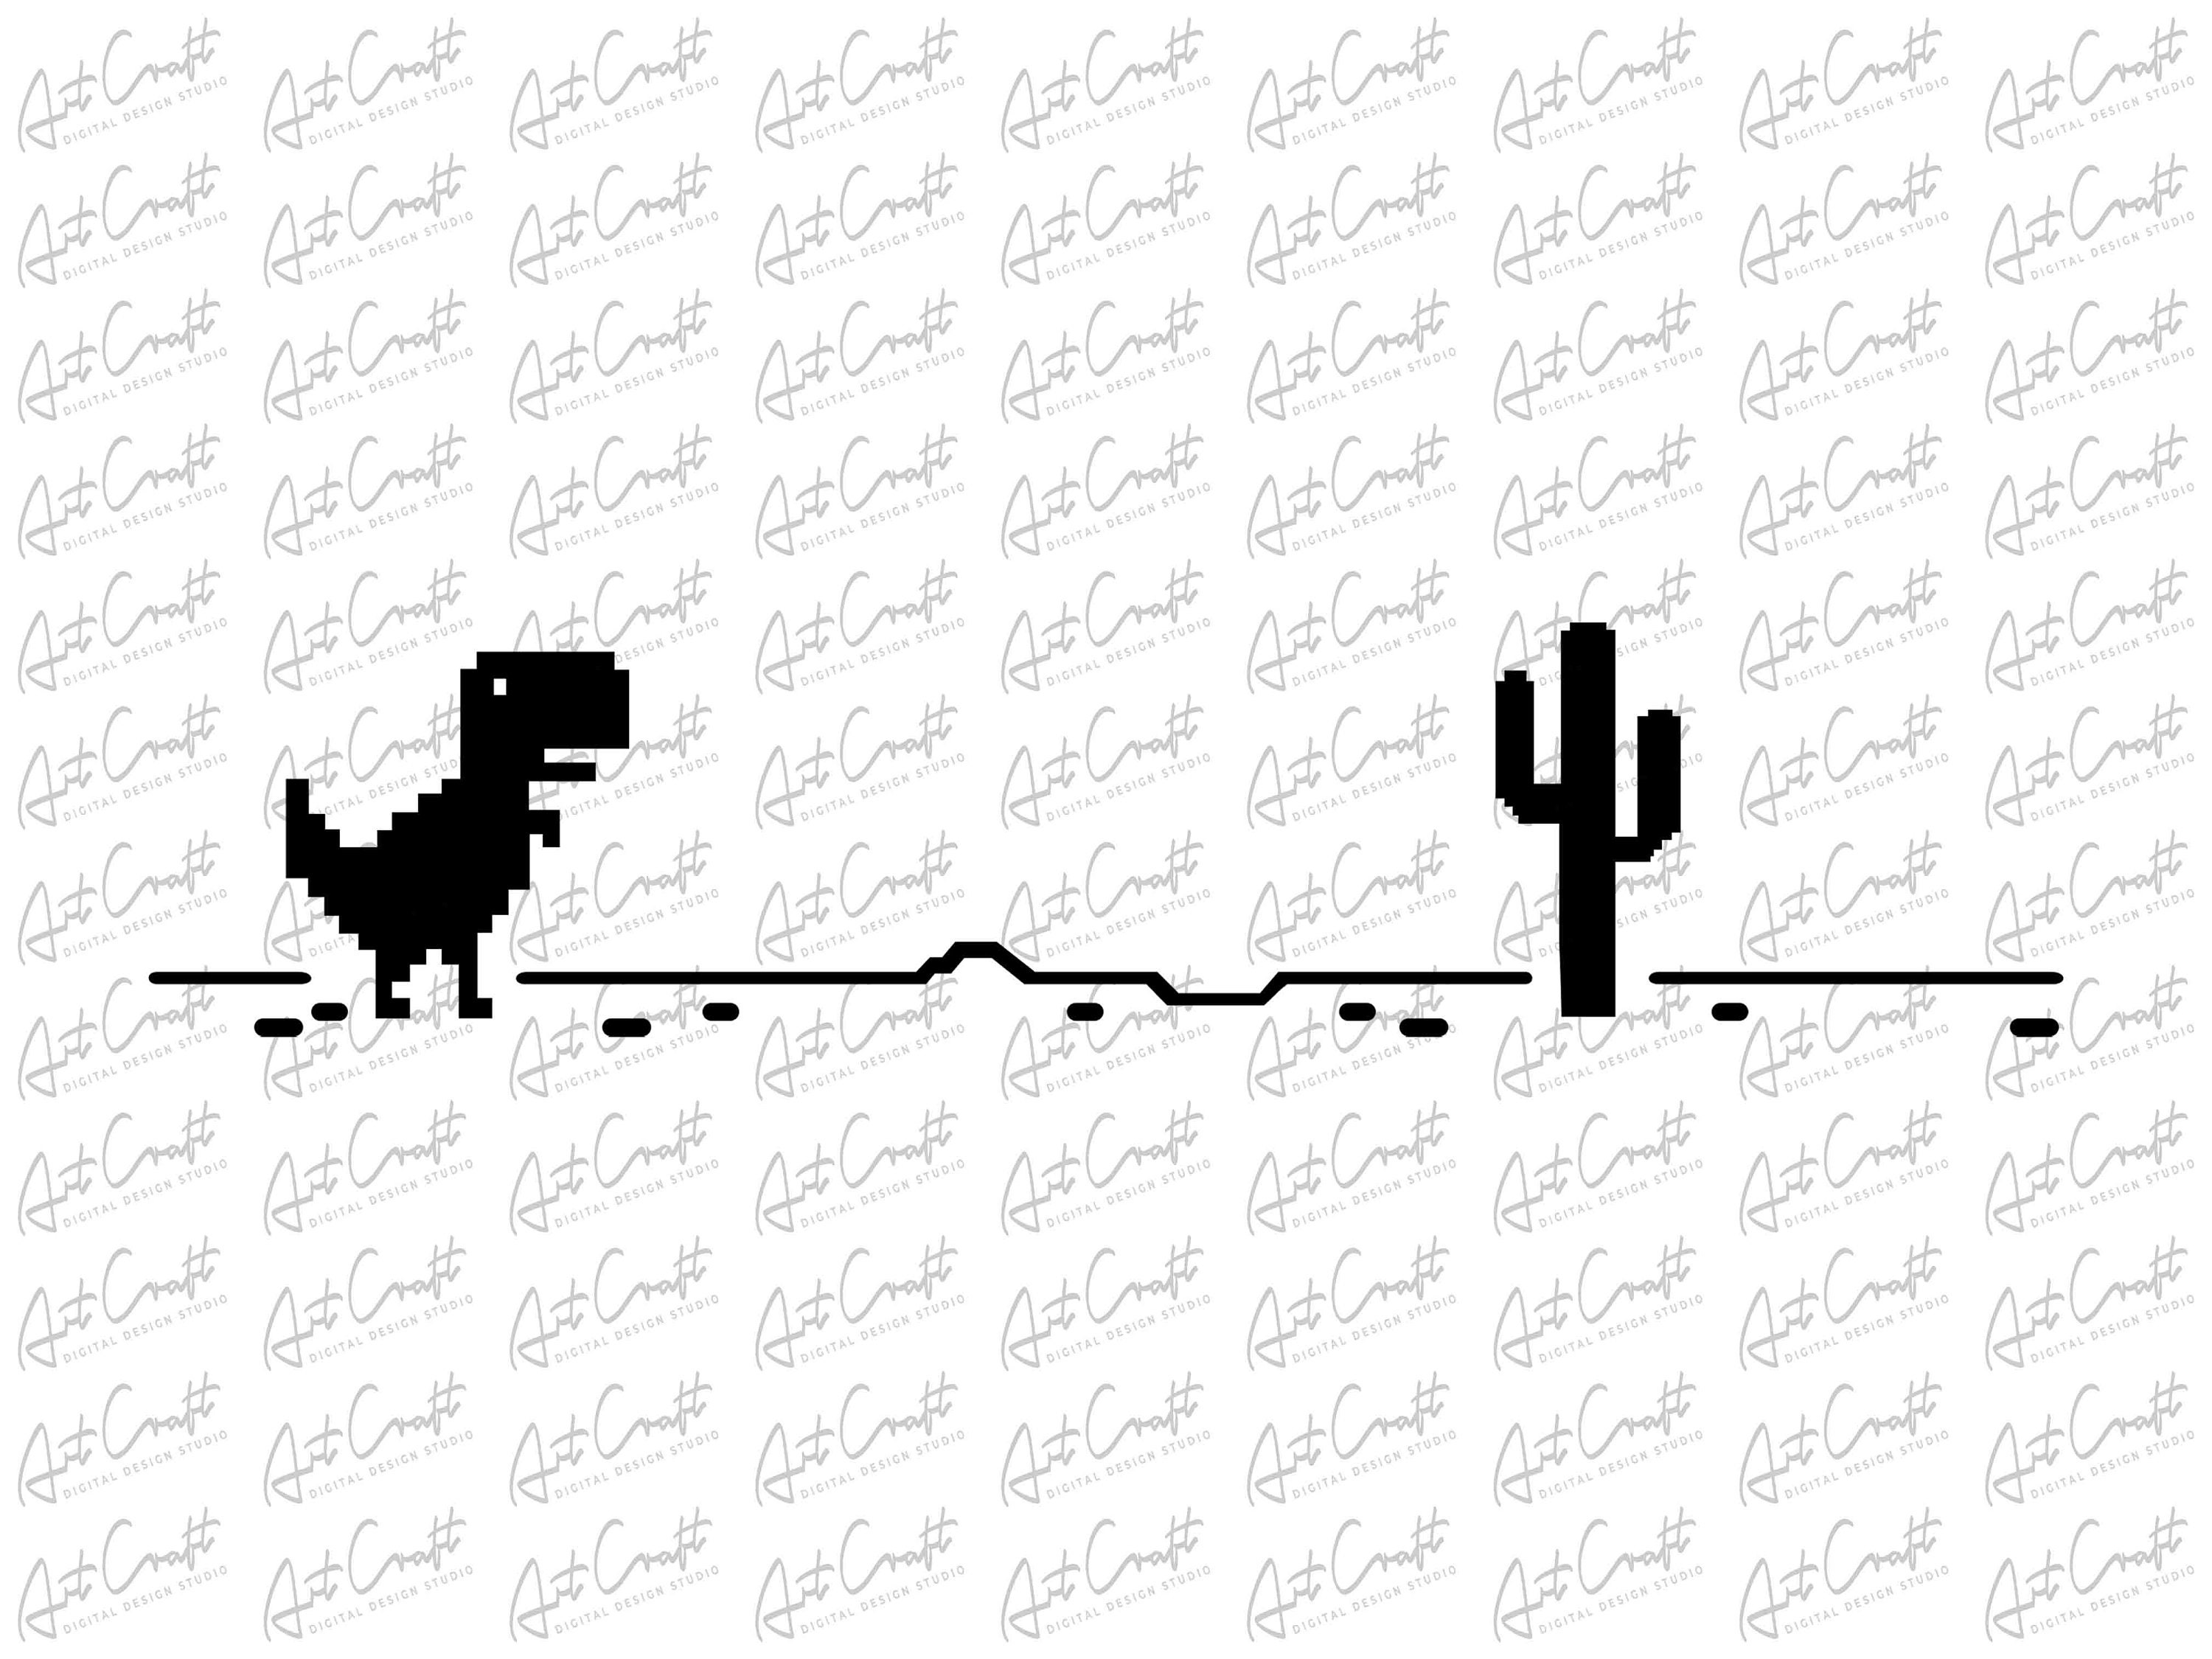 Google Chrome Dino Game - Highest Score 99999 - Full Game Playing - 94 min  - Google Dinosaur Game 